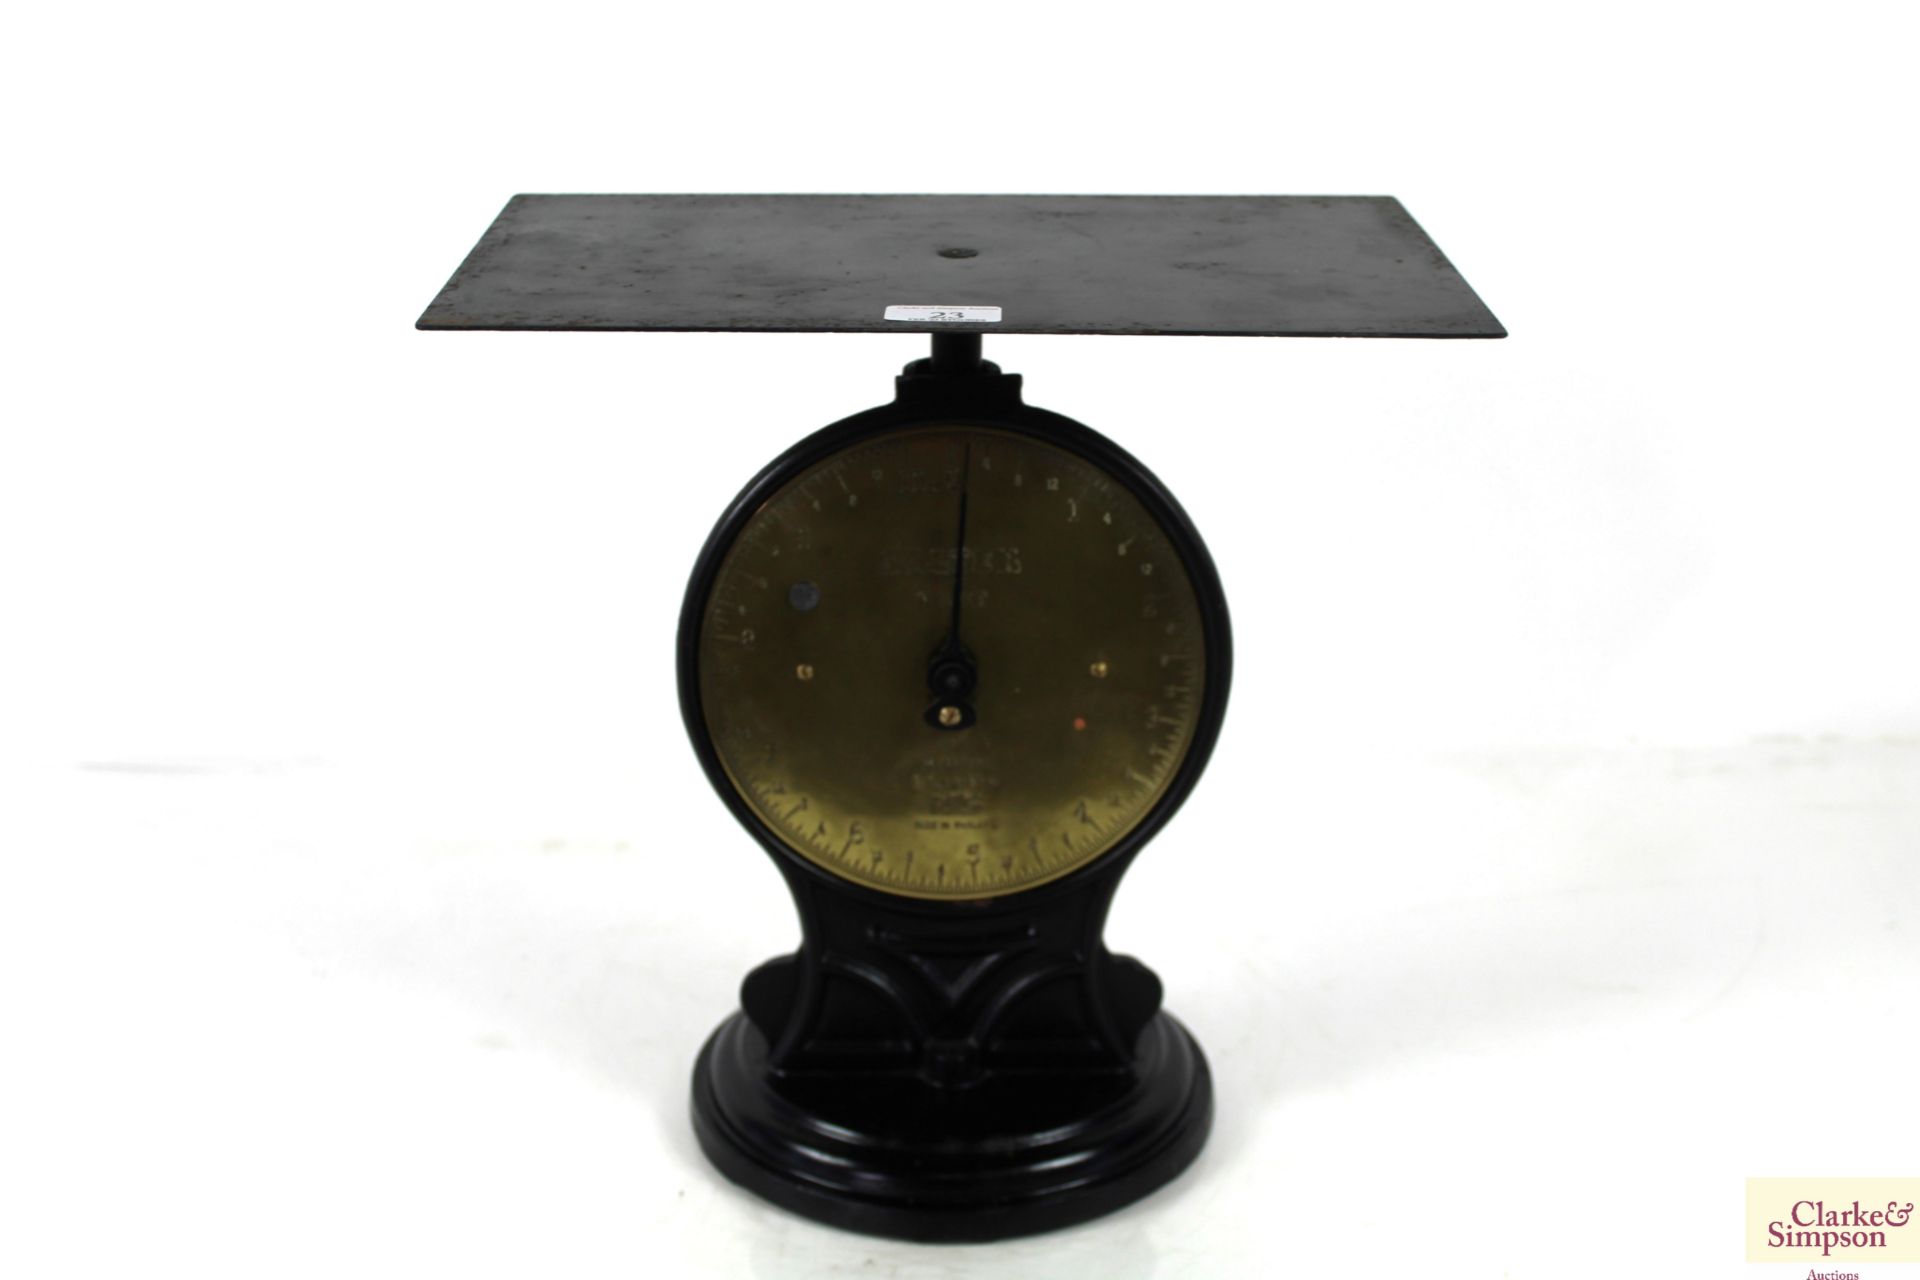 A set of Salter brass dial spring balance platform scales